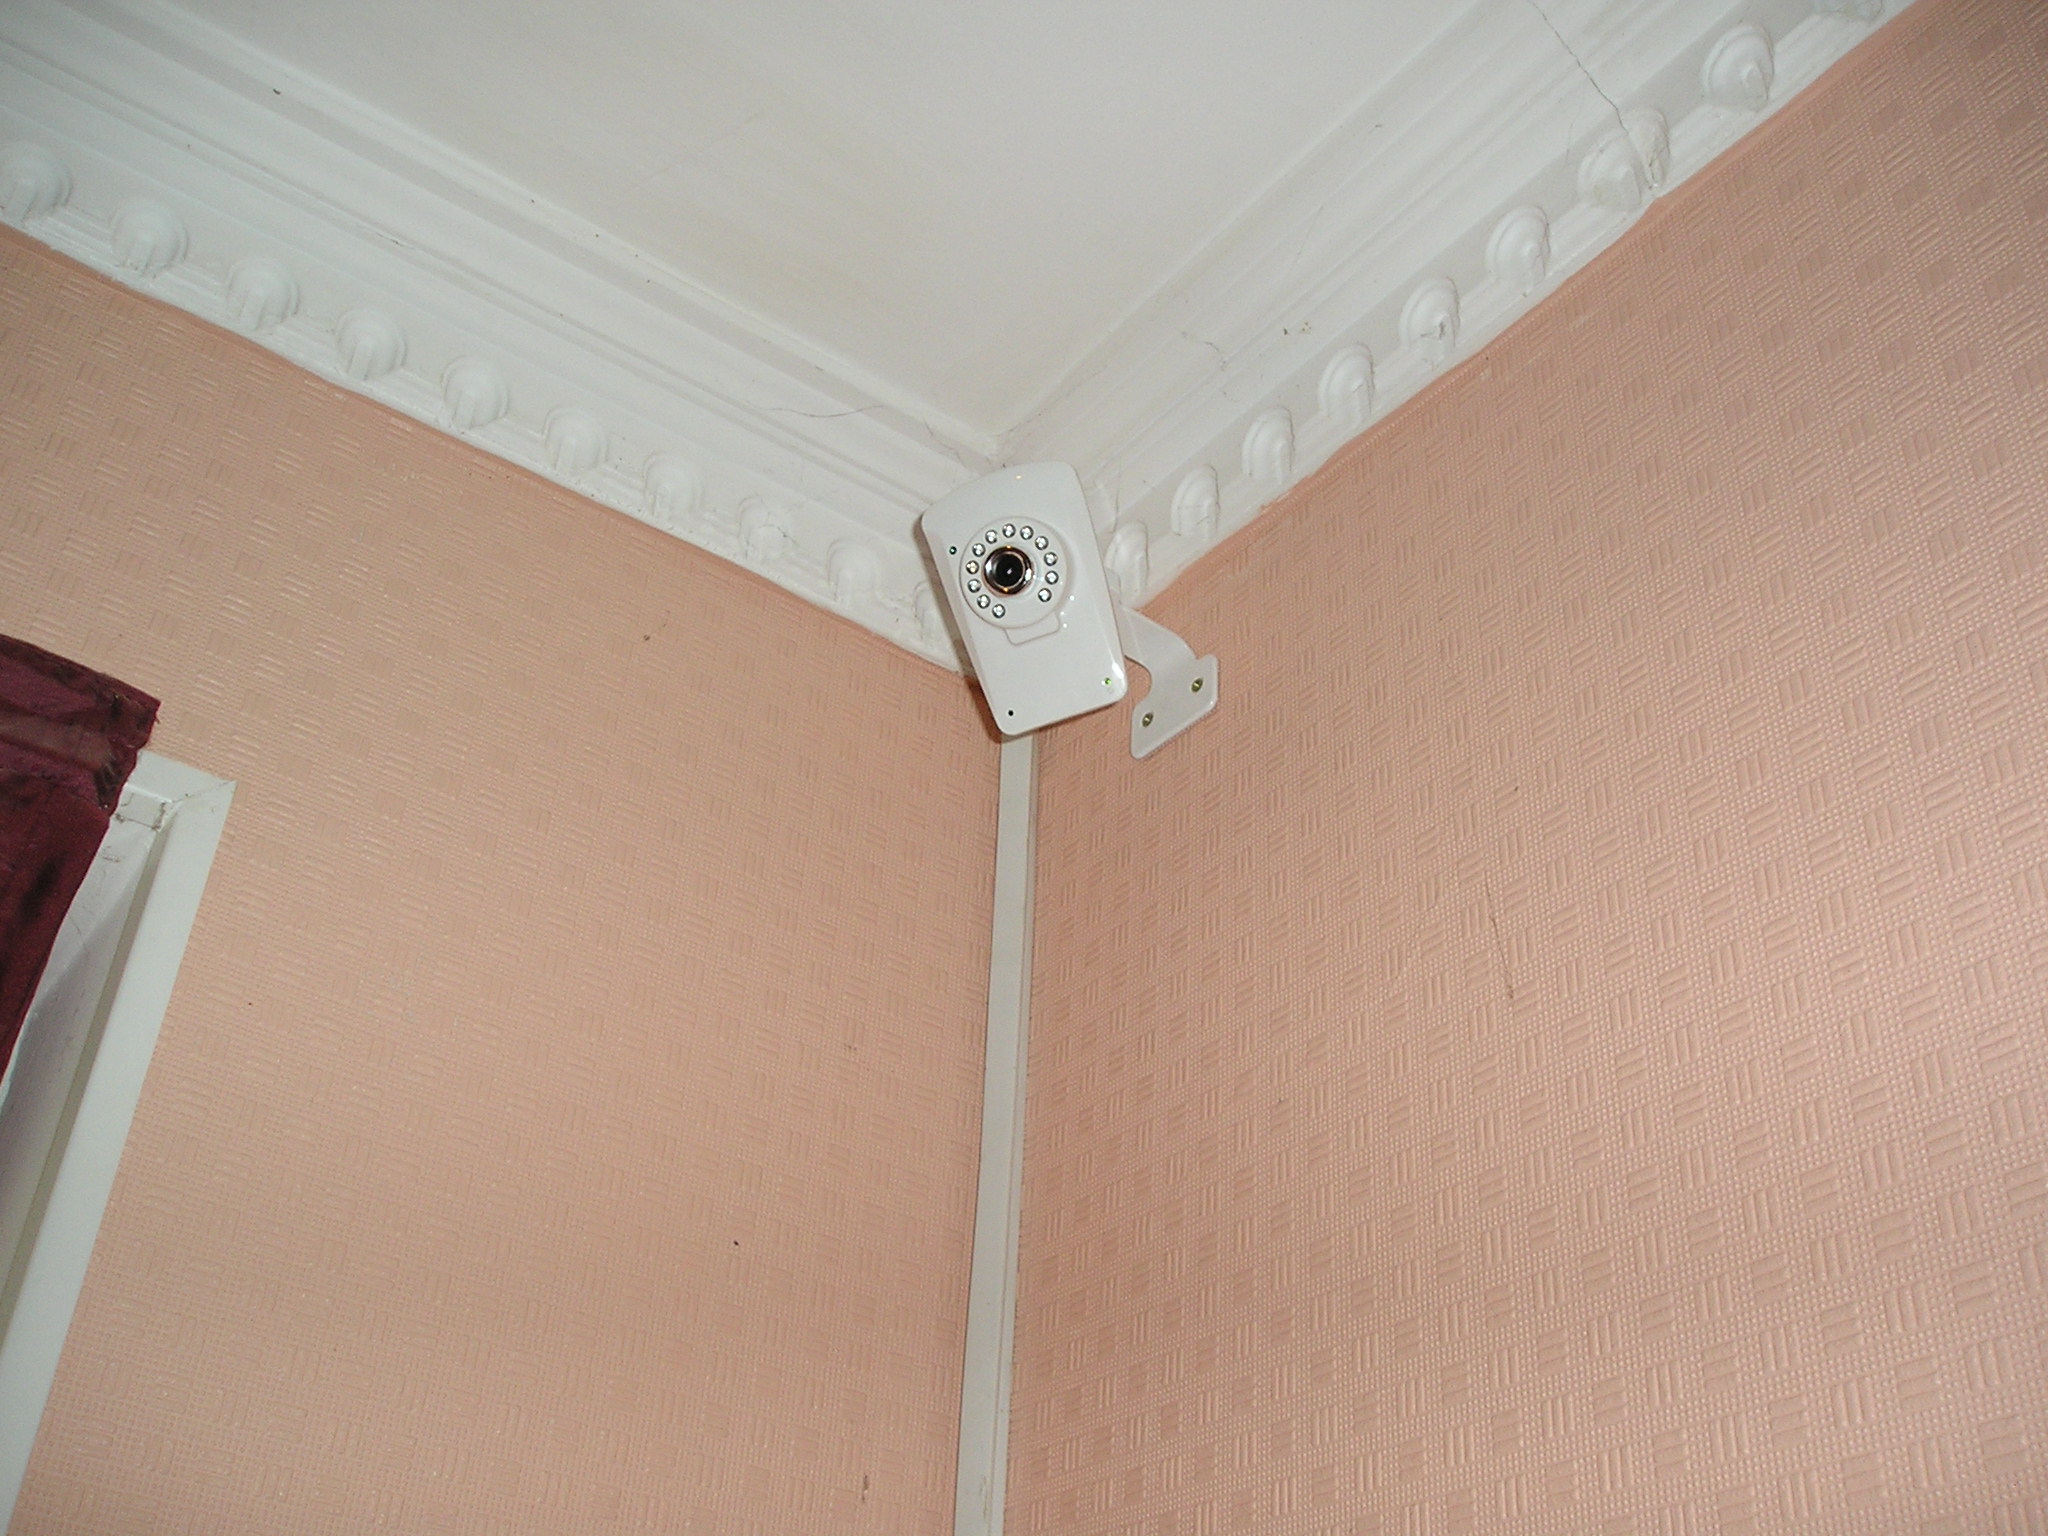 Устанавливаем камеру Link NC233W-IR в коридоре дома под потолком